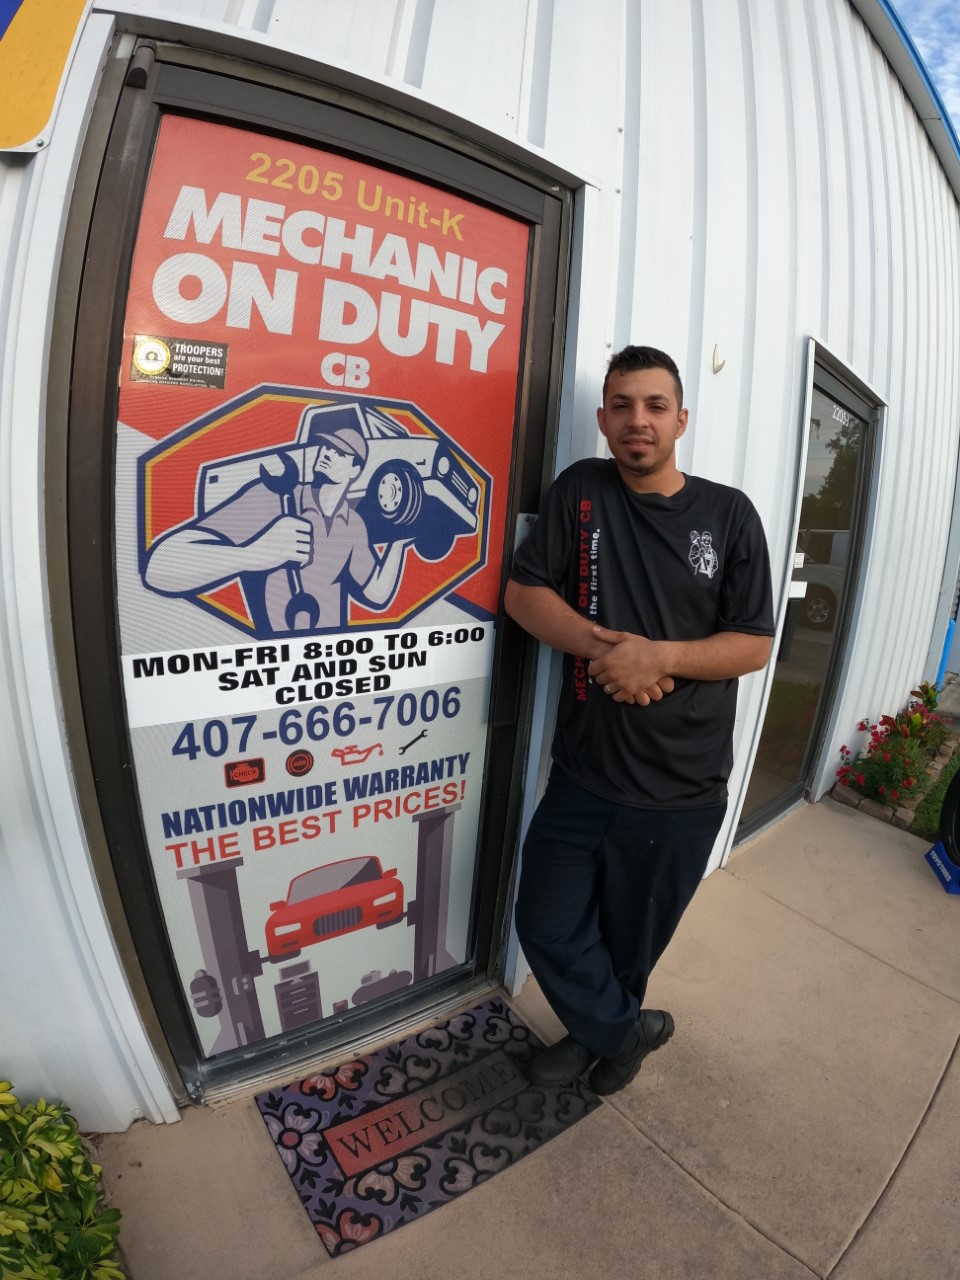 Mechanic - Mechanic On Duty CB LLC image 2